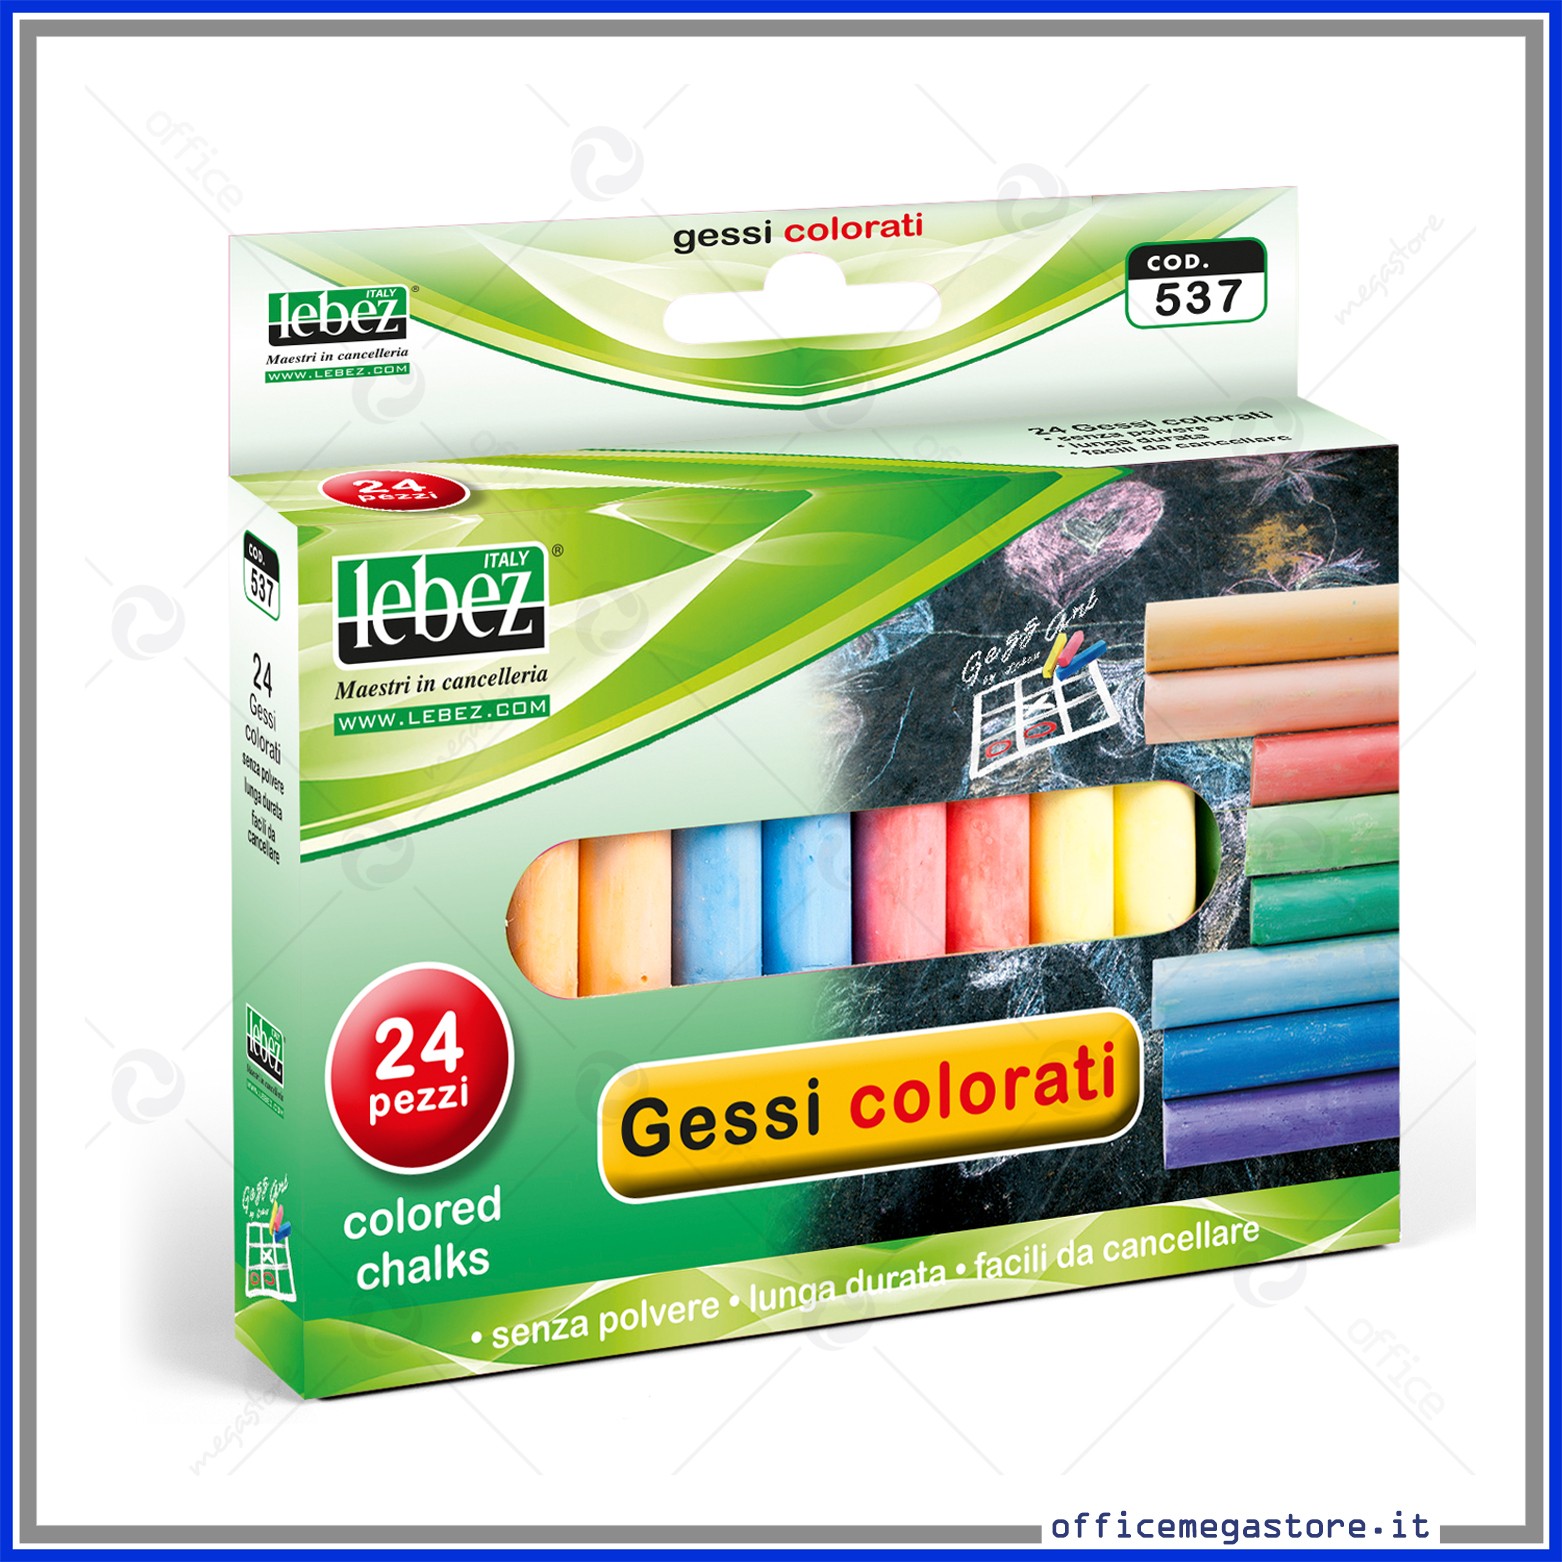 Gessi Colorati tondi senza polvere Scatola 24 pezzi - Lebez 537